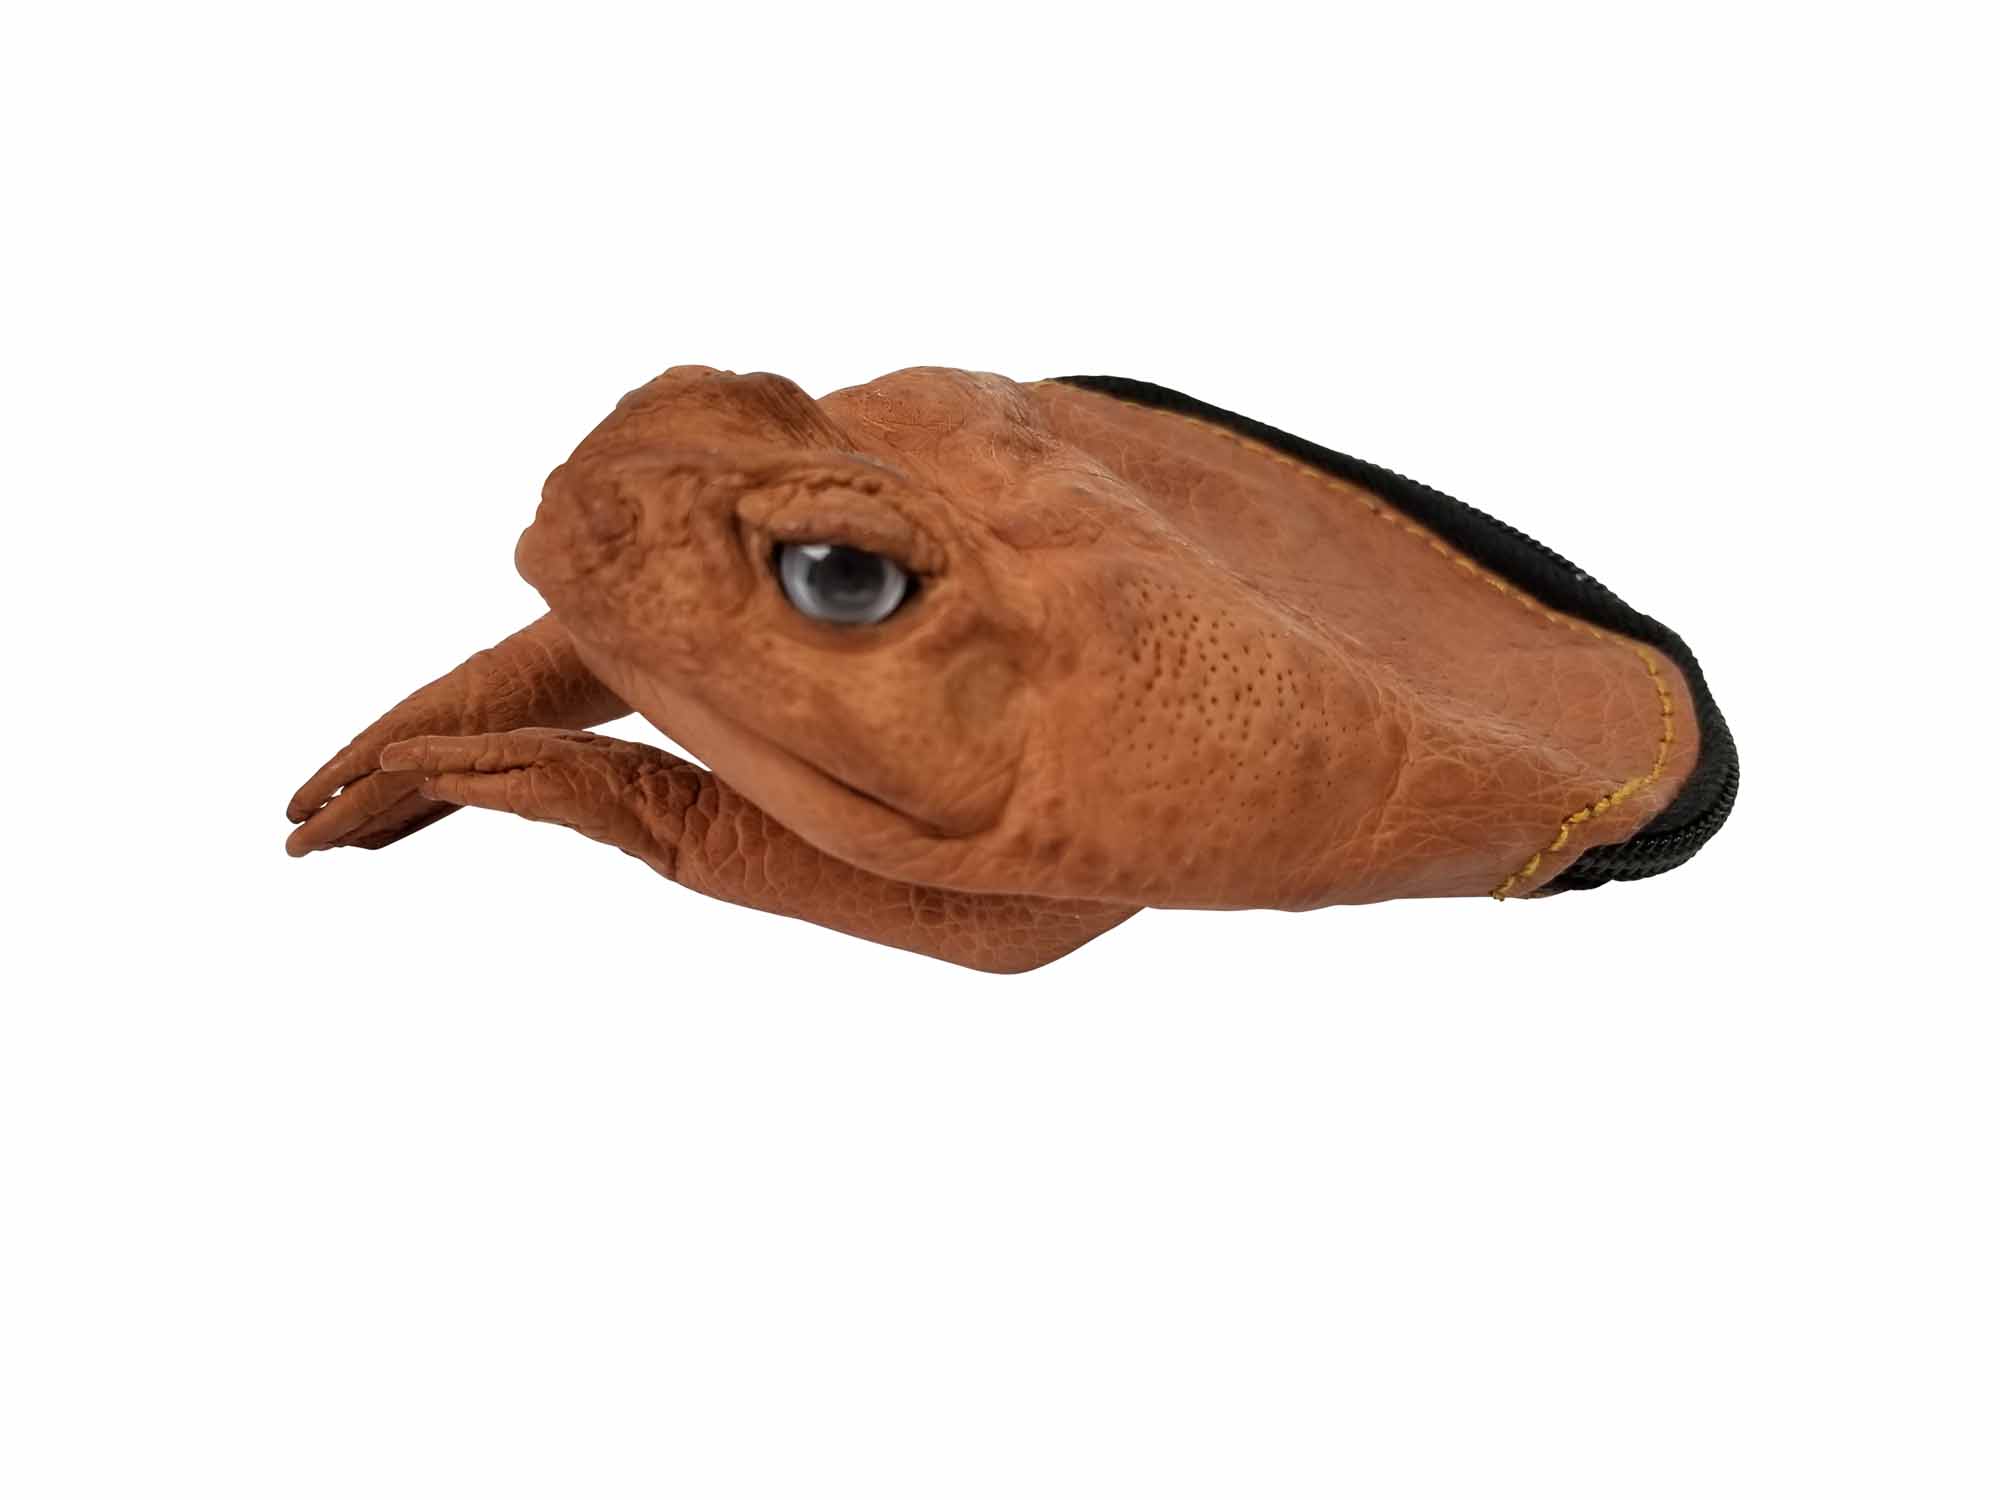 Sagit Sugar Cane Toad-Full-Body Purse, Coin Pouch Made From Taxidermy Cane- Toad: أفضل المنتجات في متجر Joom Geek الإلكتروني